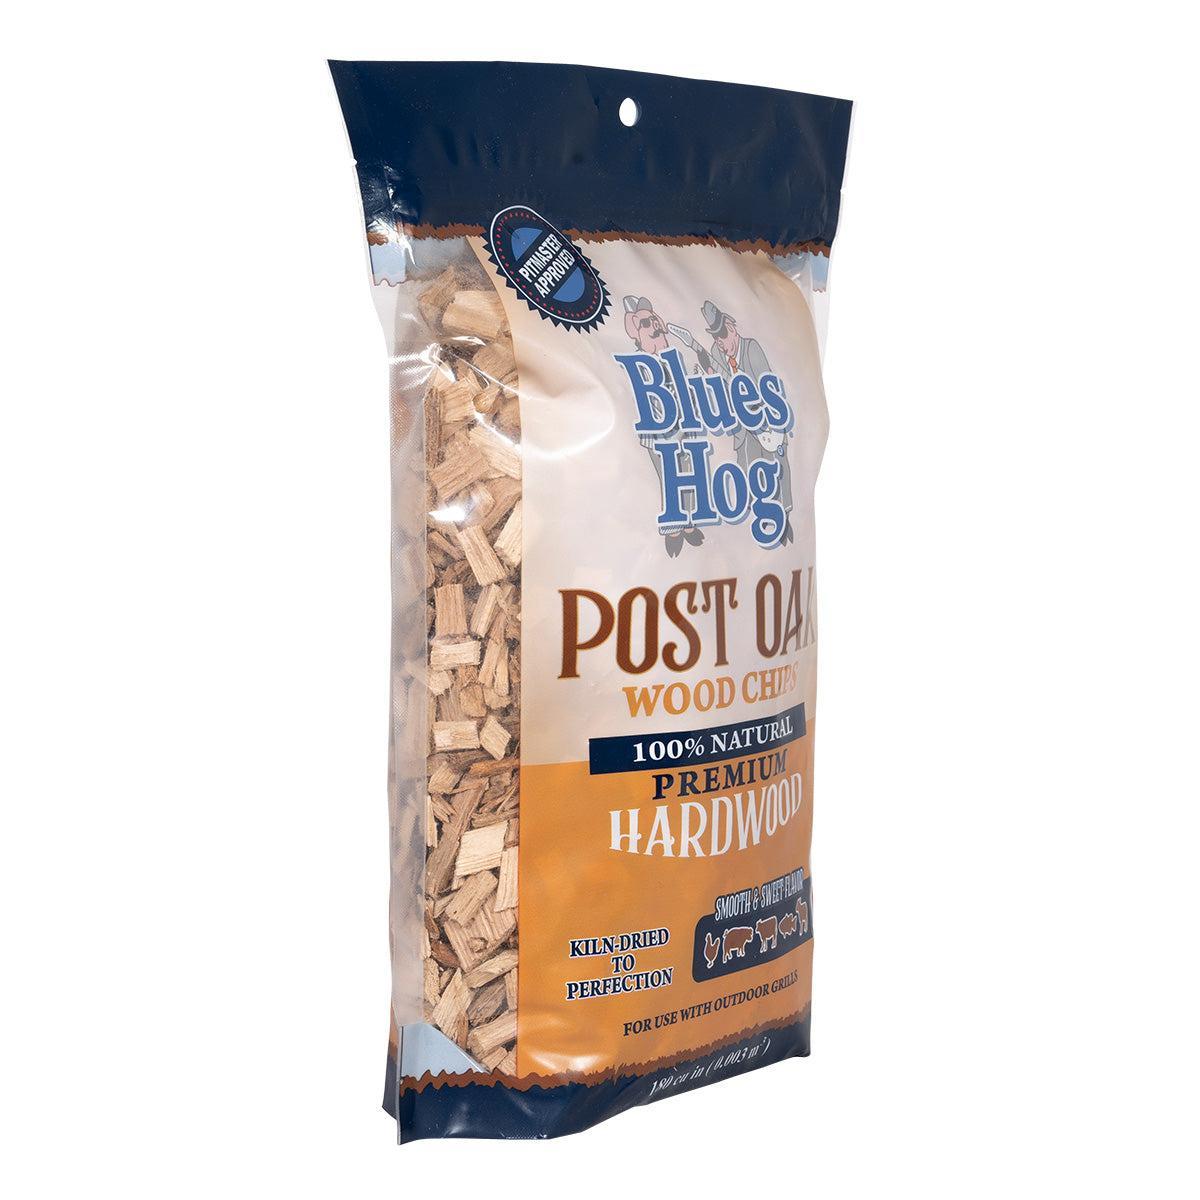 Post Oak Wood Chips